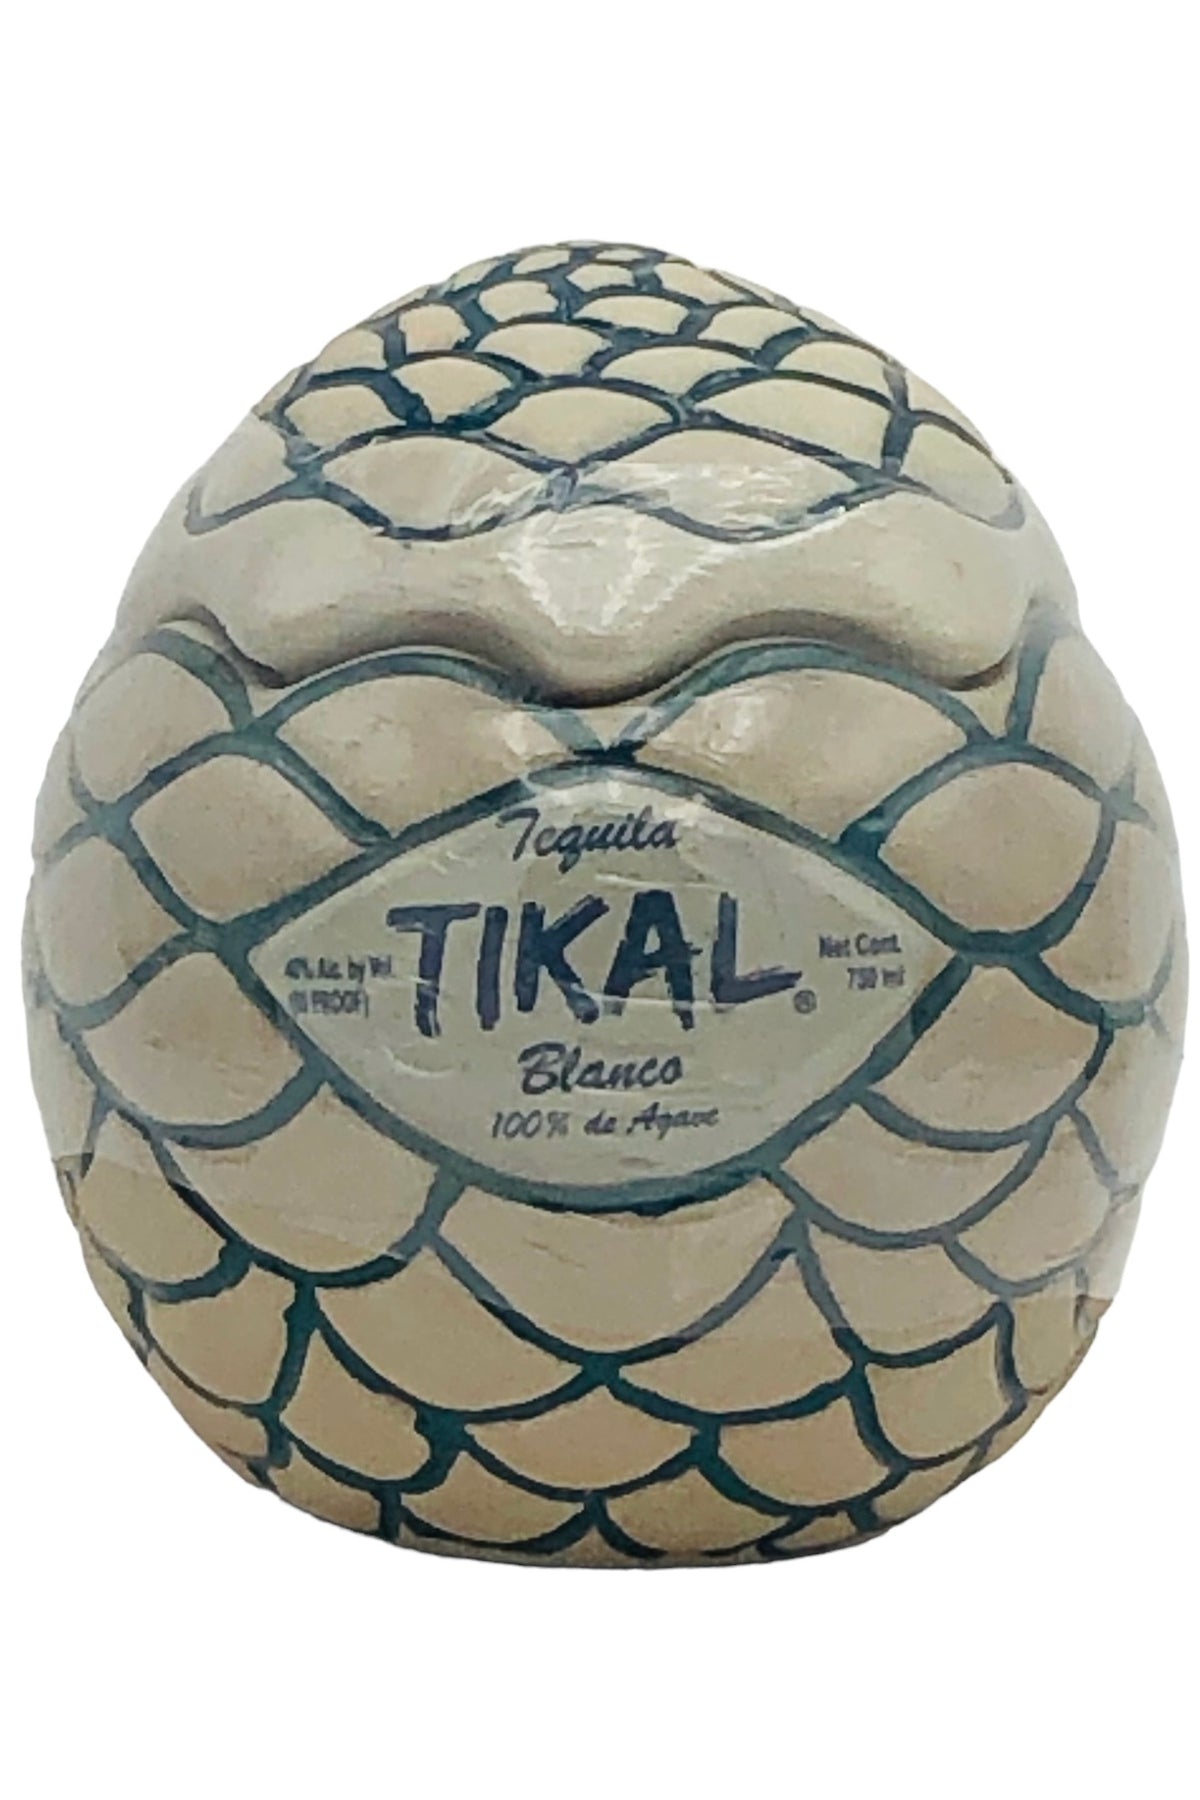 Tikal Blanco Tequila